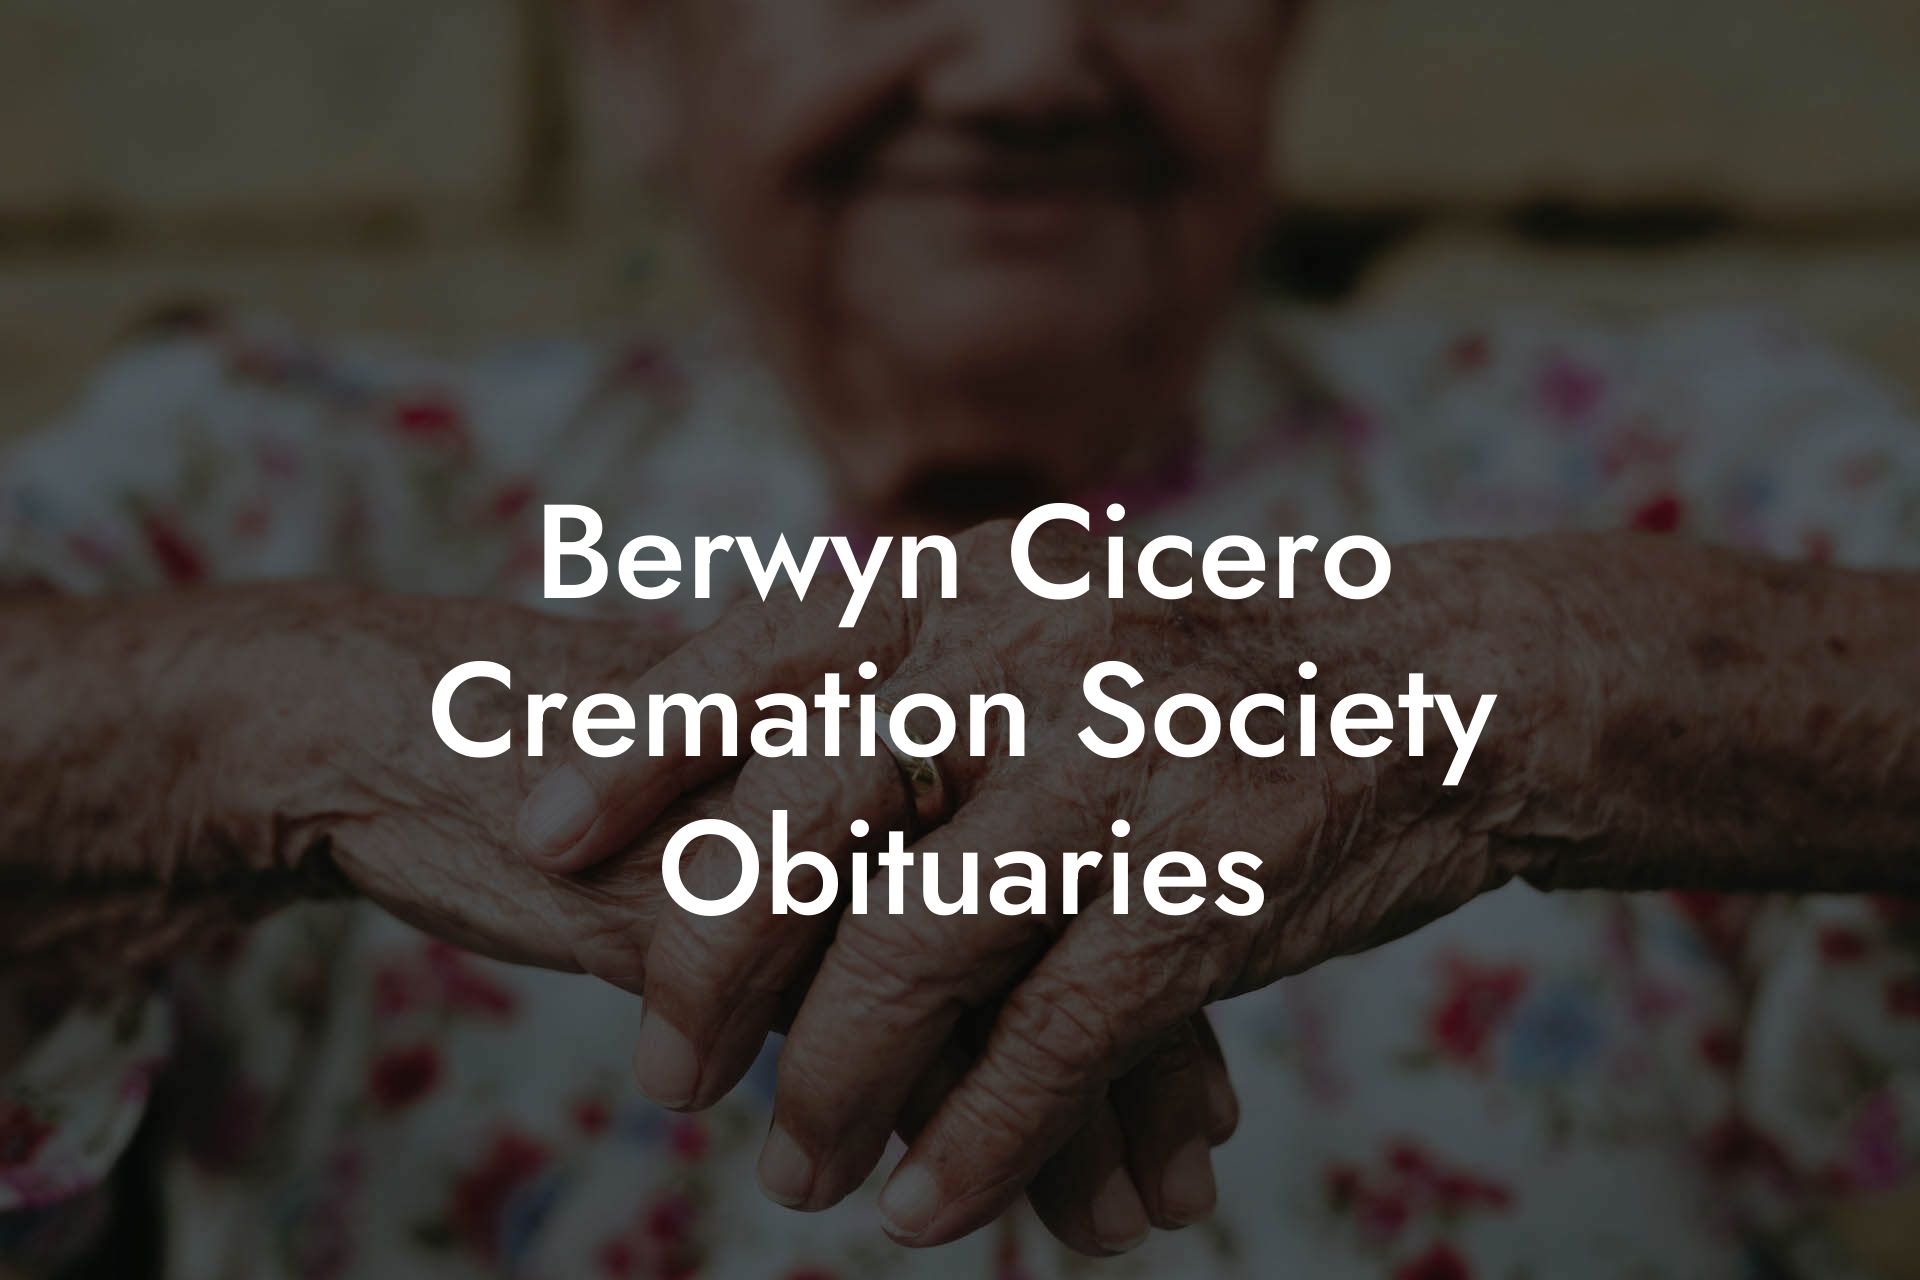 Berwyn Cicero Cremation Society Obituaries